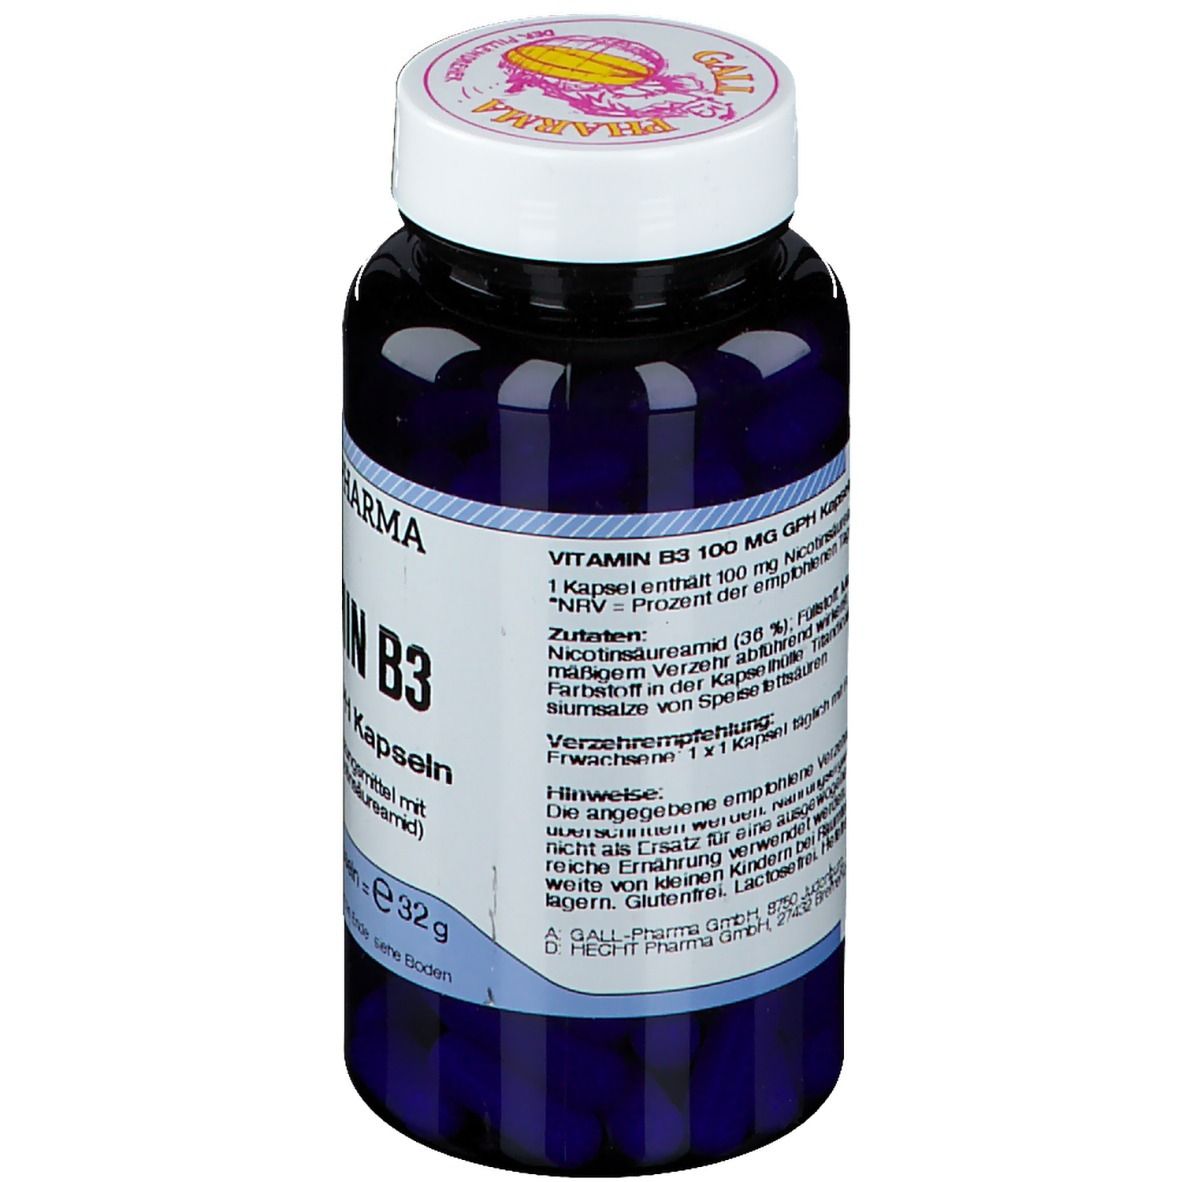 GALL PHARMA Vitamin B3 100 mg